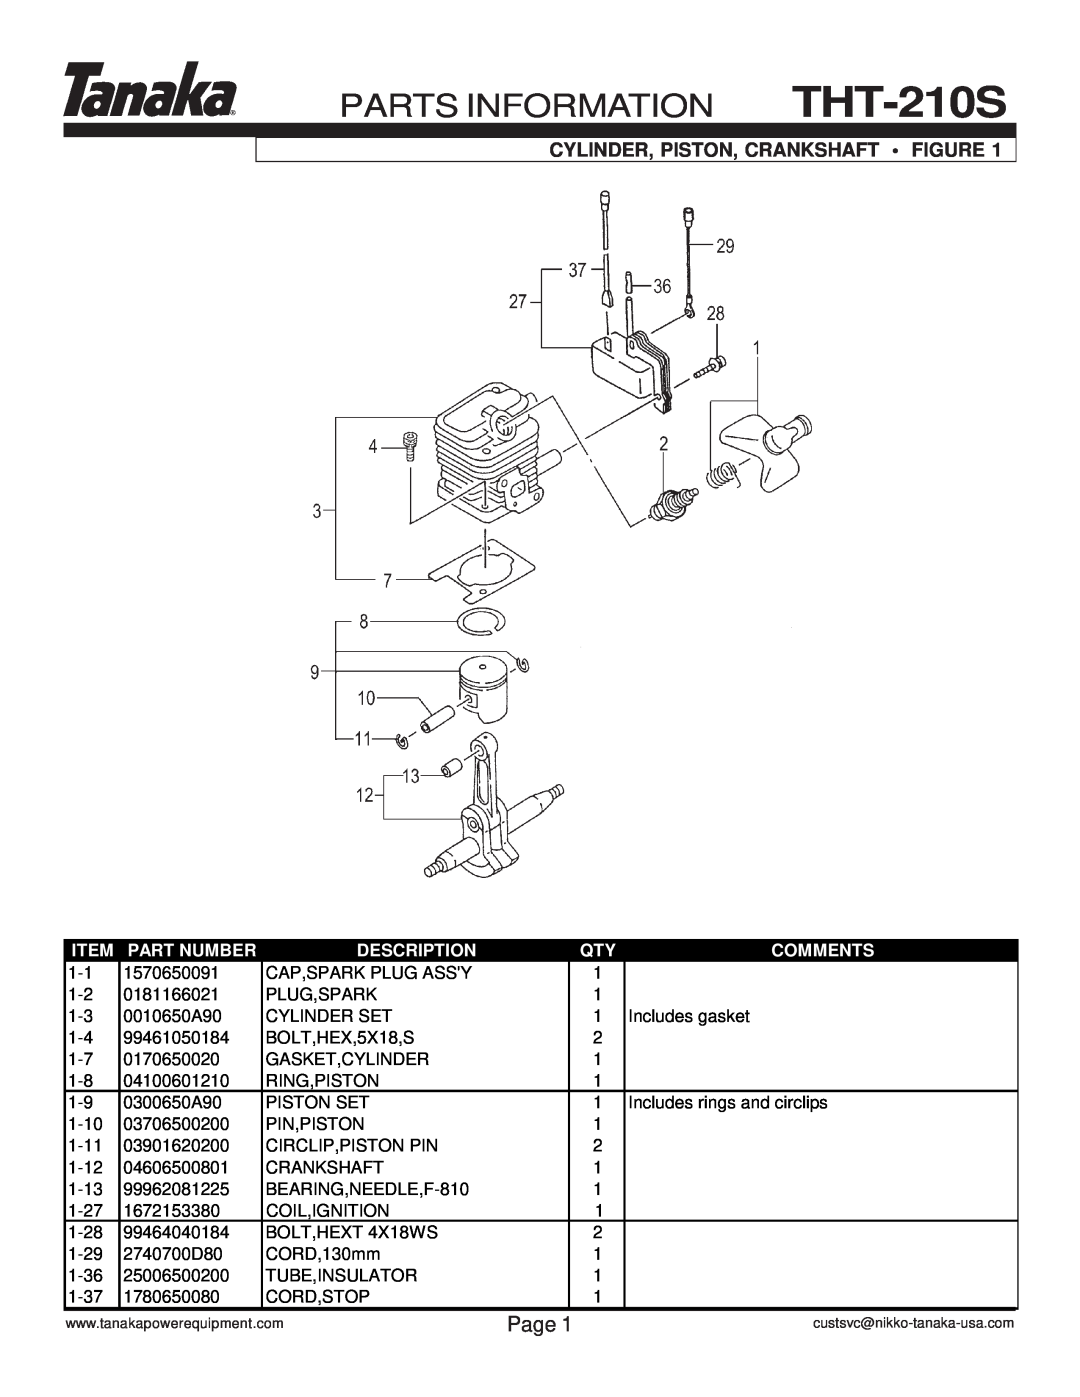 Tanaka manual PARTS INFORMATION THT-210S, Cylinder, Piston, Crankshaft • Figure, Page, Item, Part Number, Description 